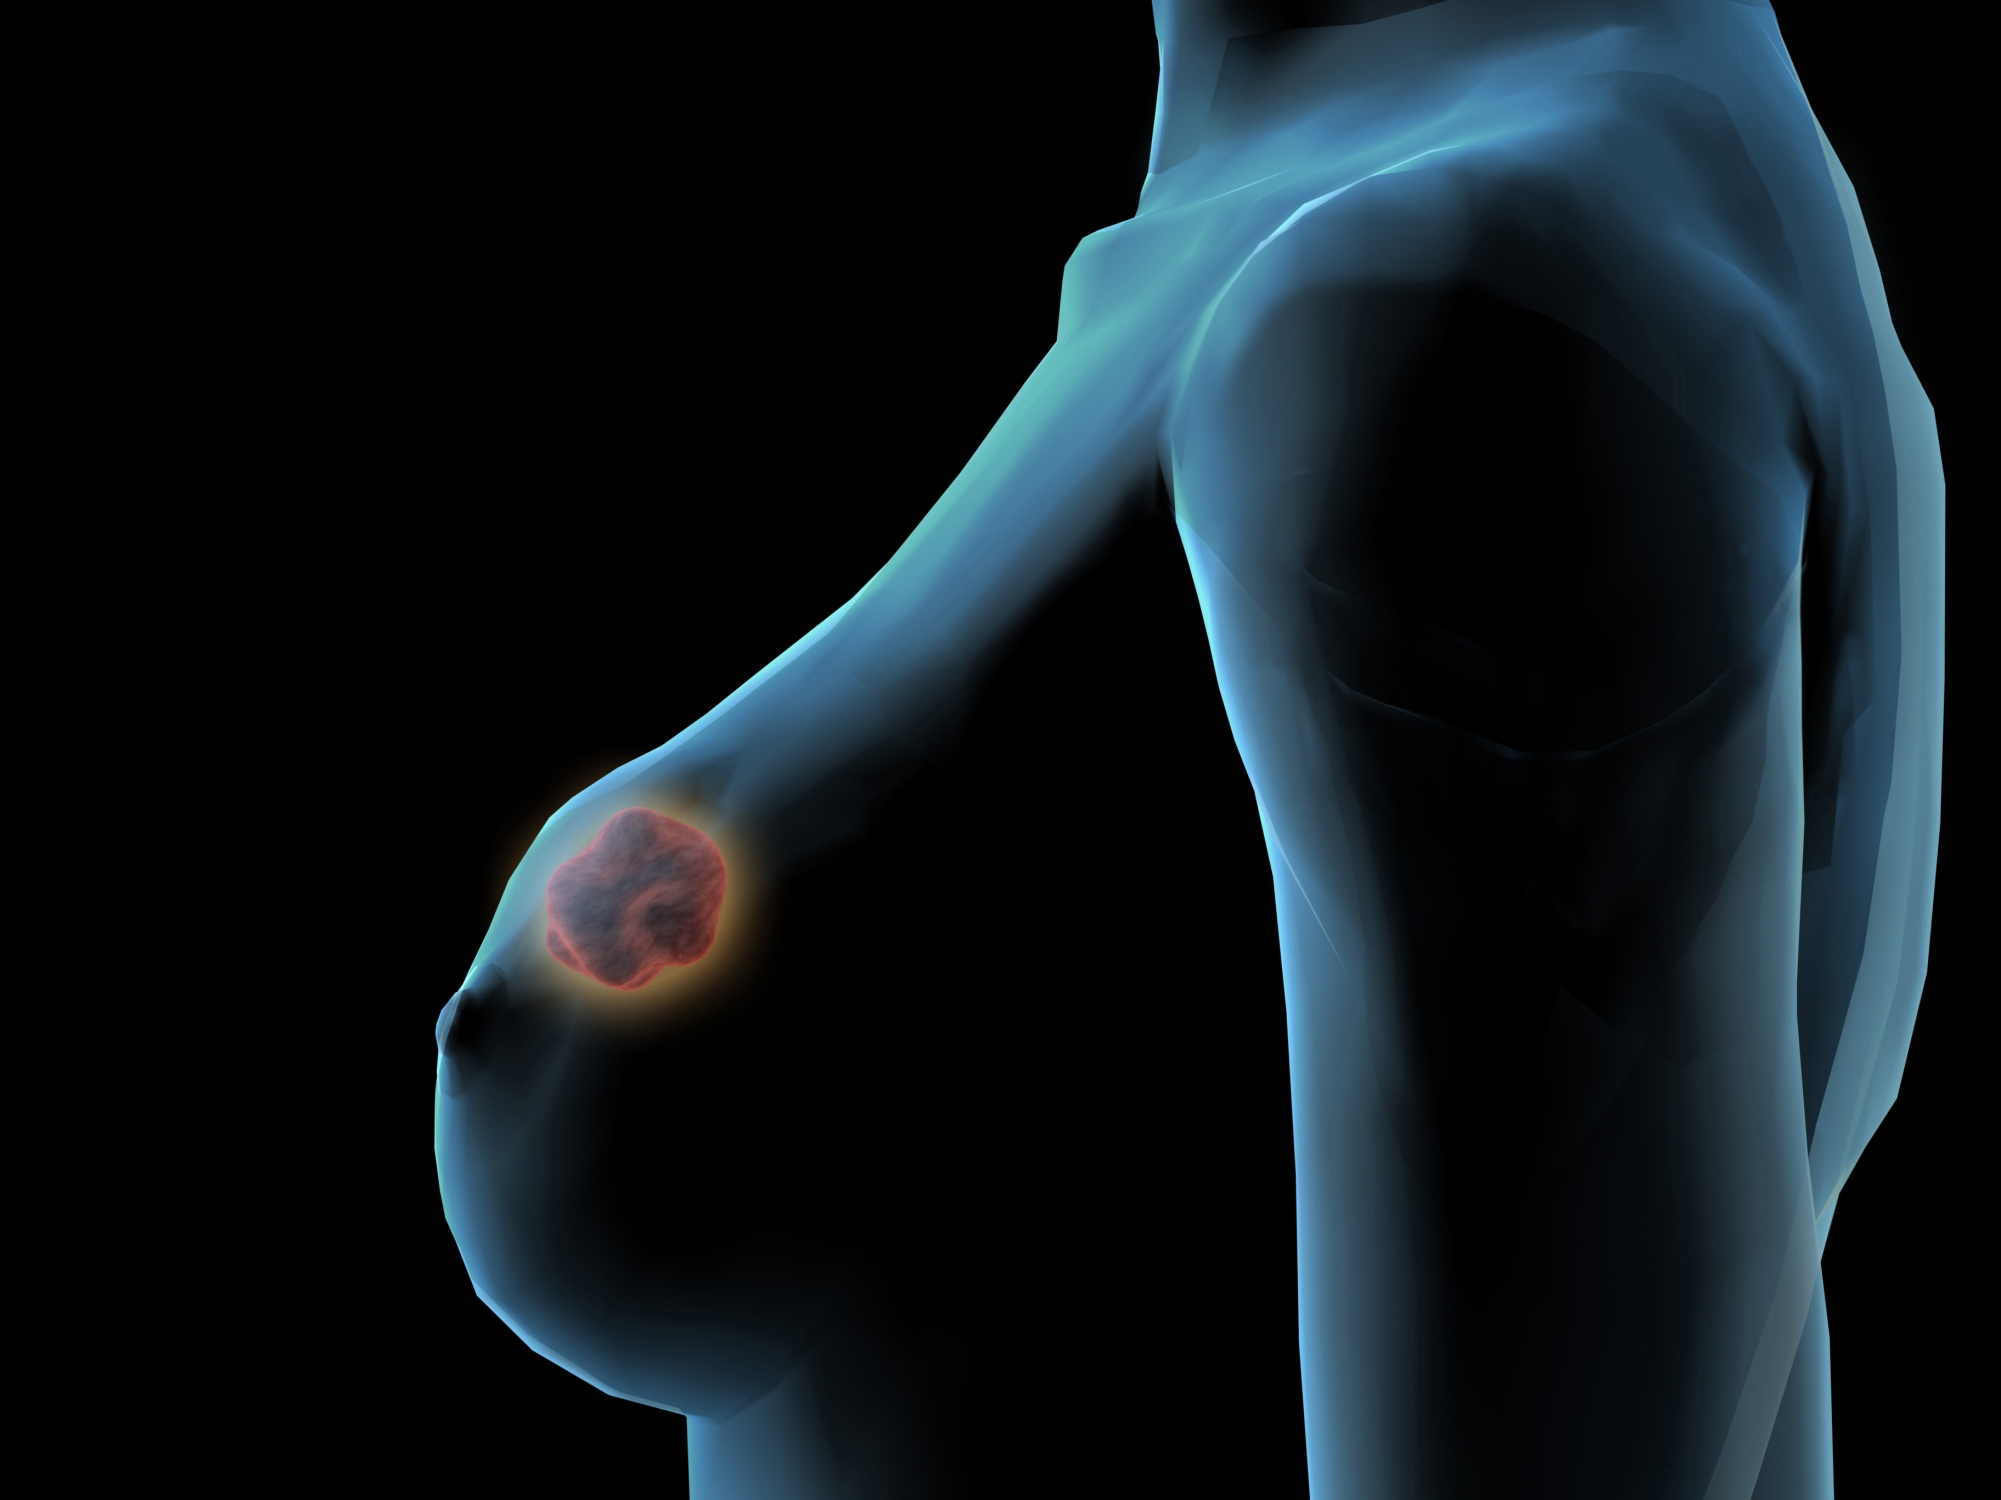 признаки рака груди у женщин первые признаки фото 107